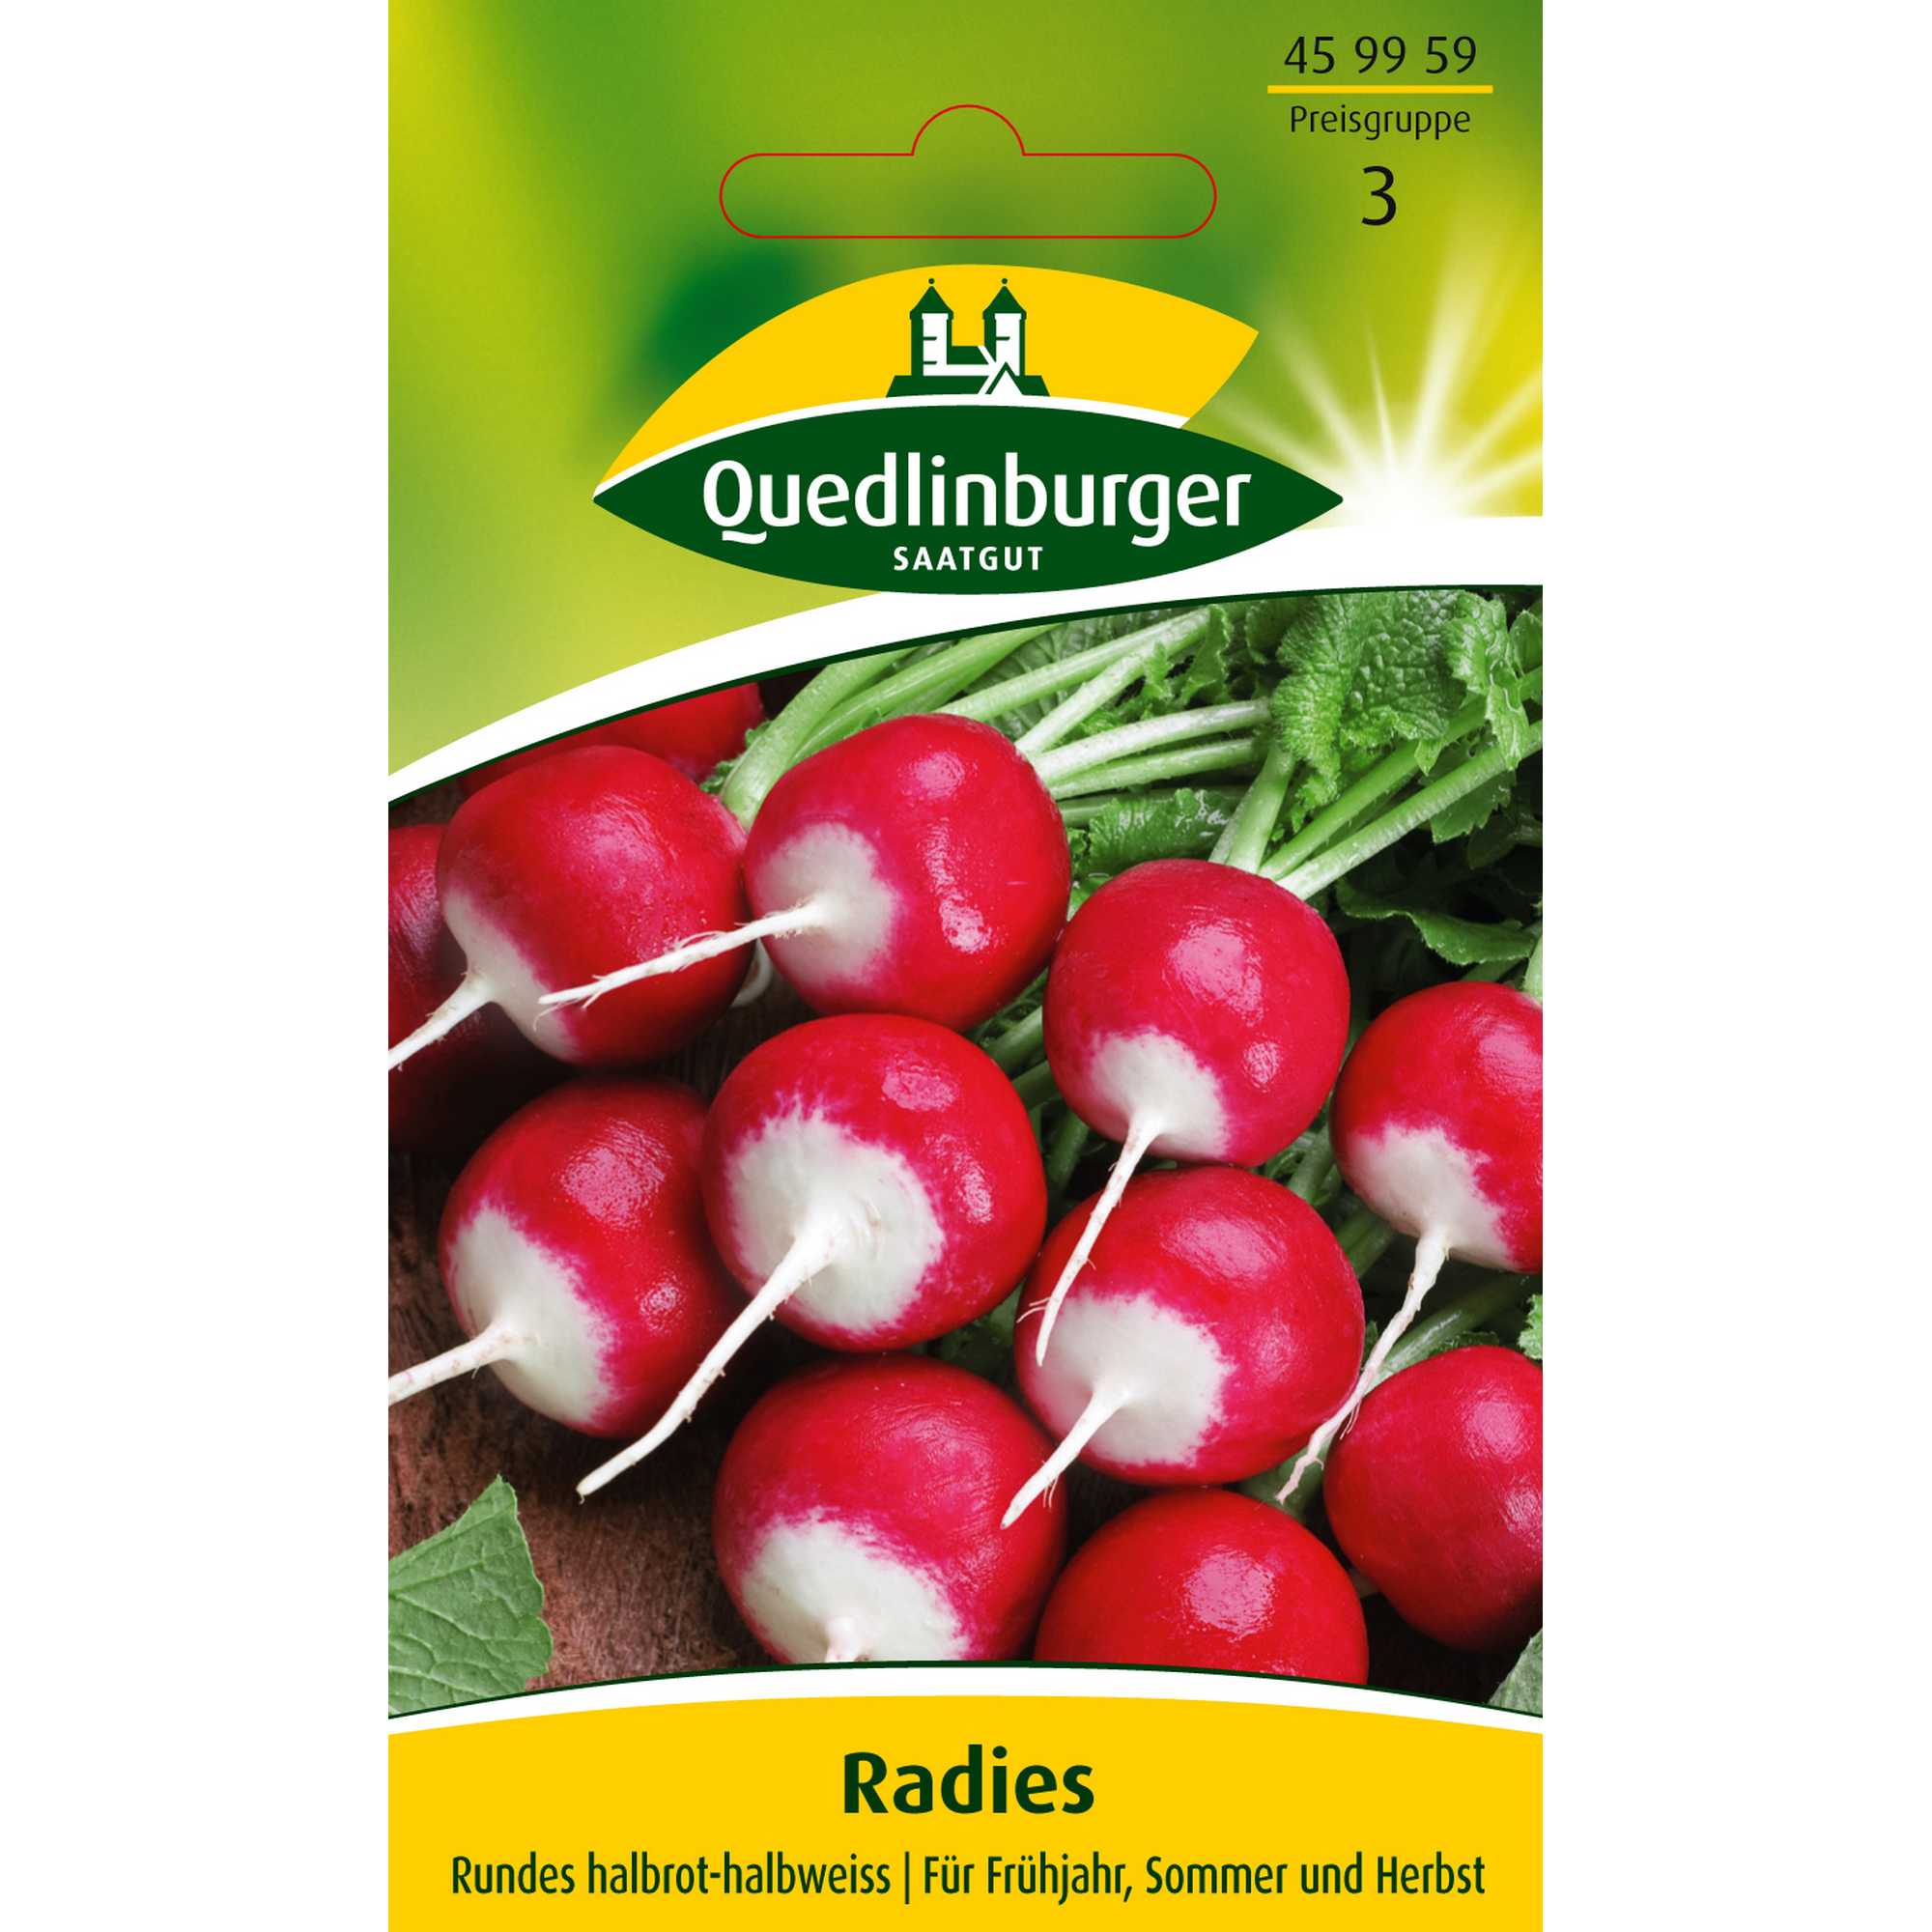 Radies 'Rundes halbrot-halbweiss' + product picture